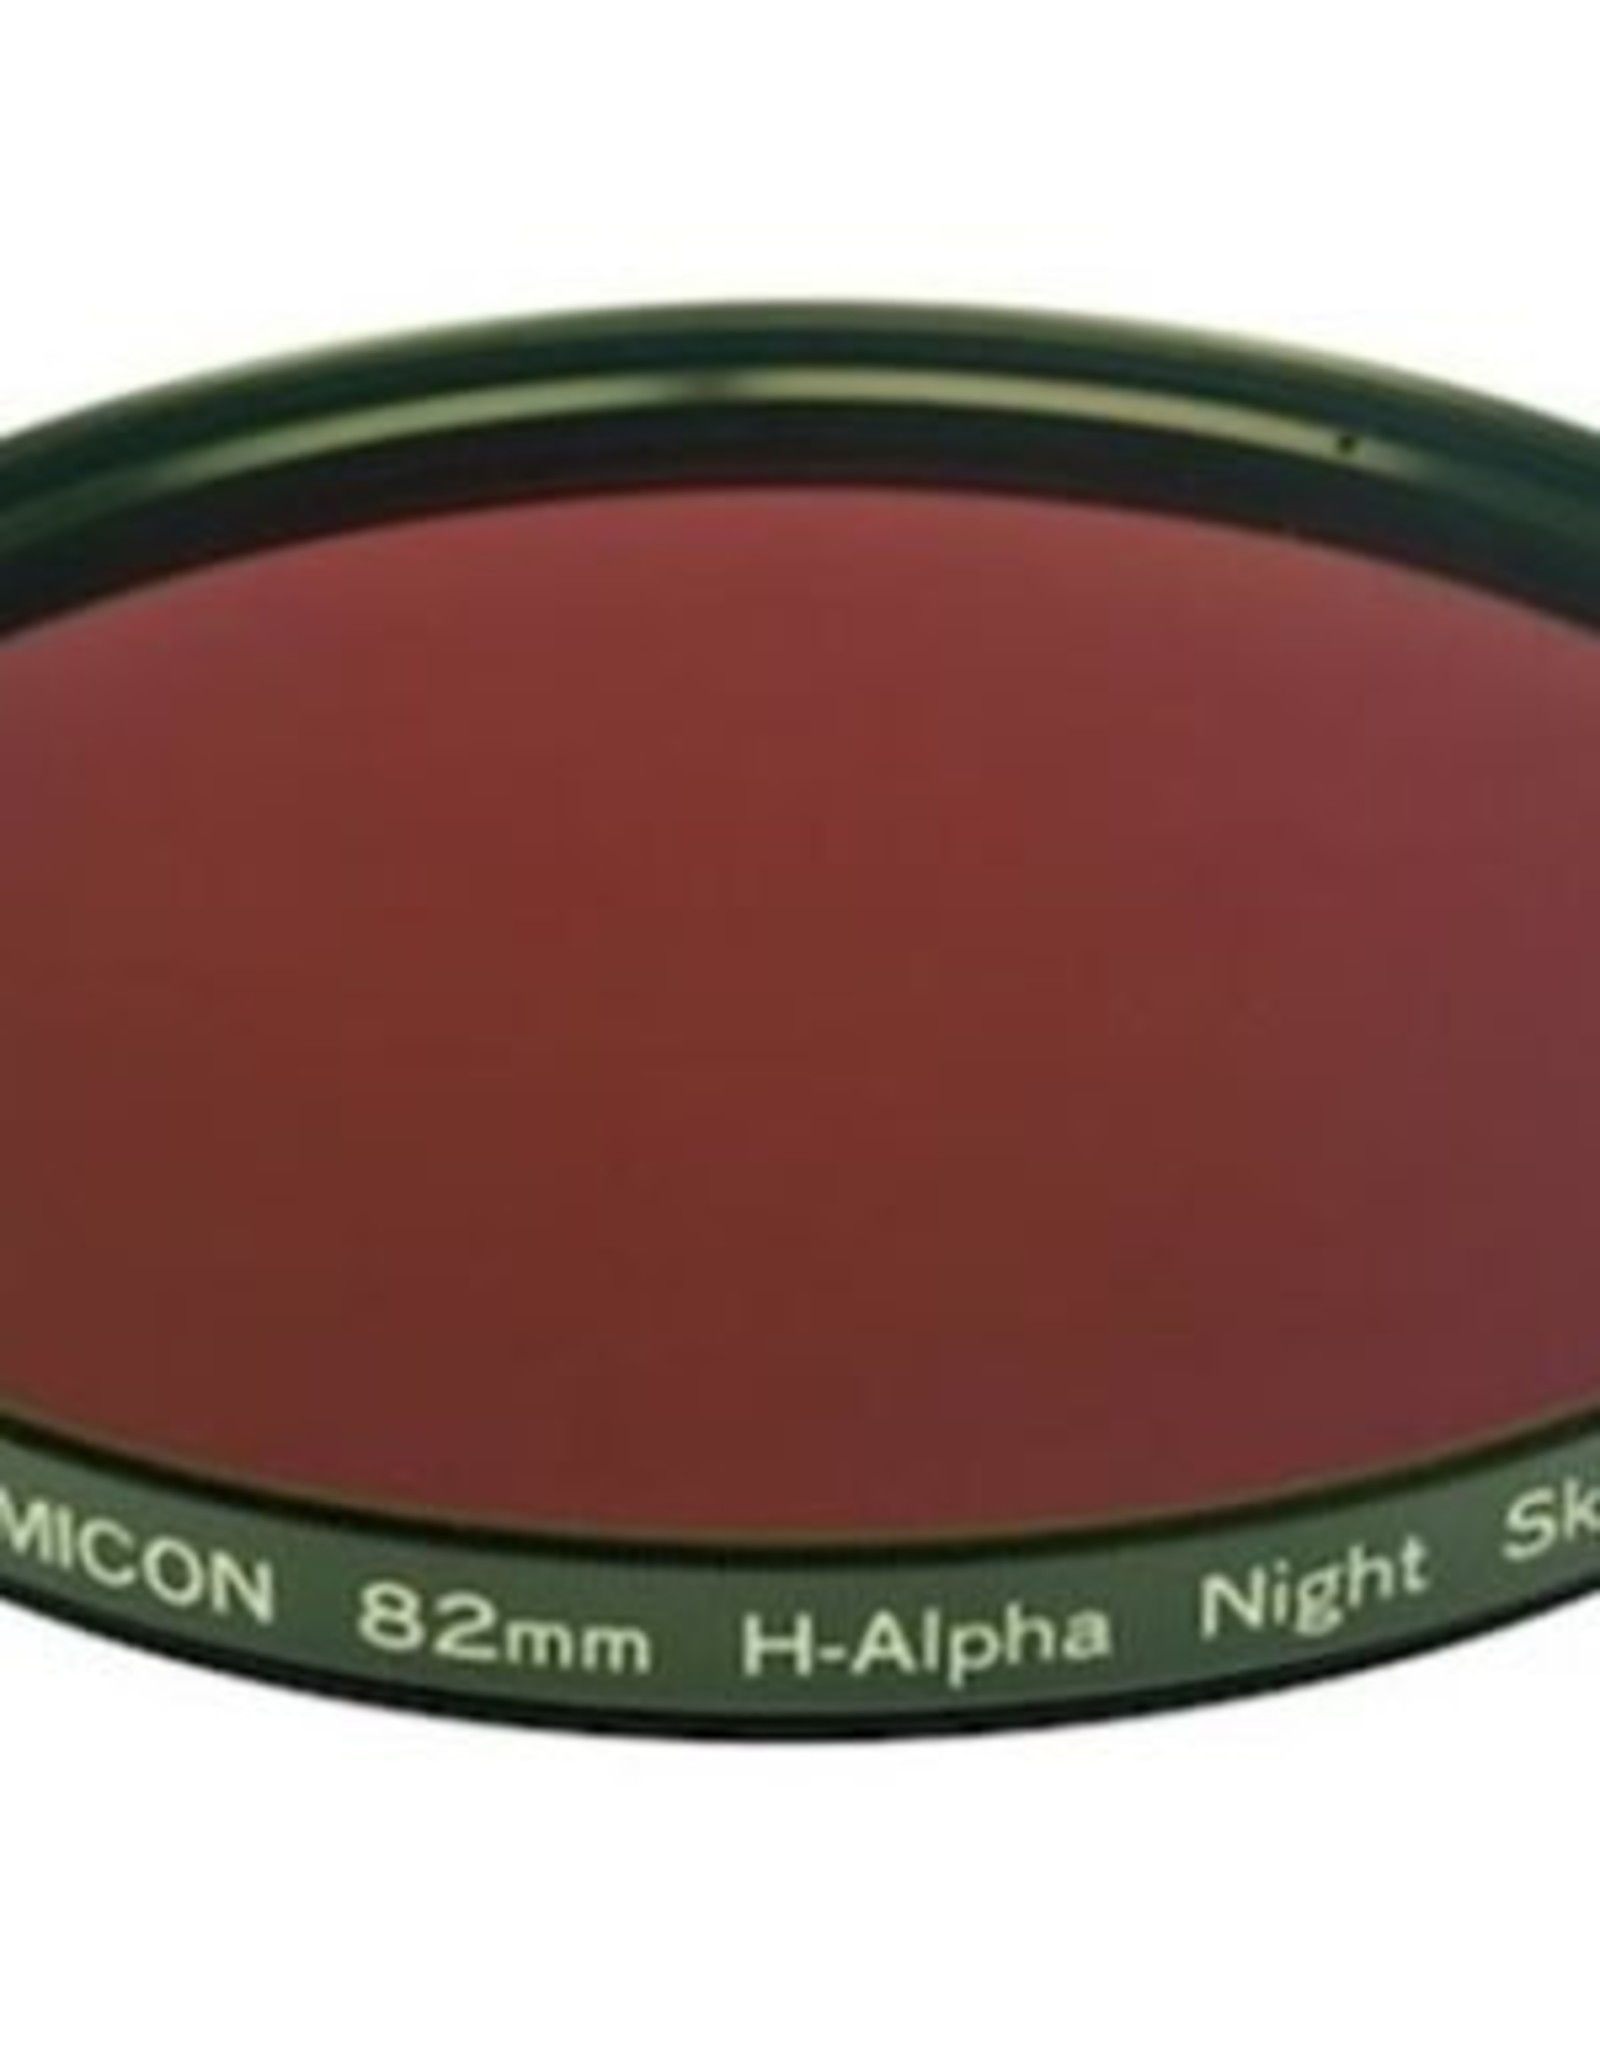 Lumicon Lumicon 82mm Night Sky Hydrogen-Alpha Filter